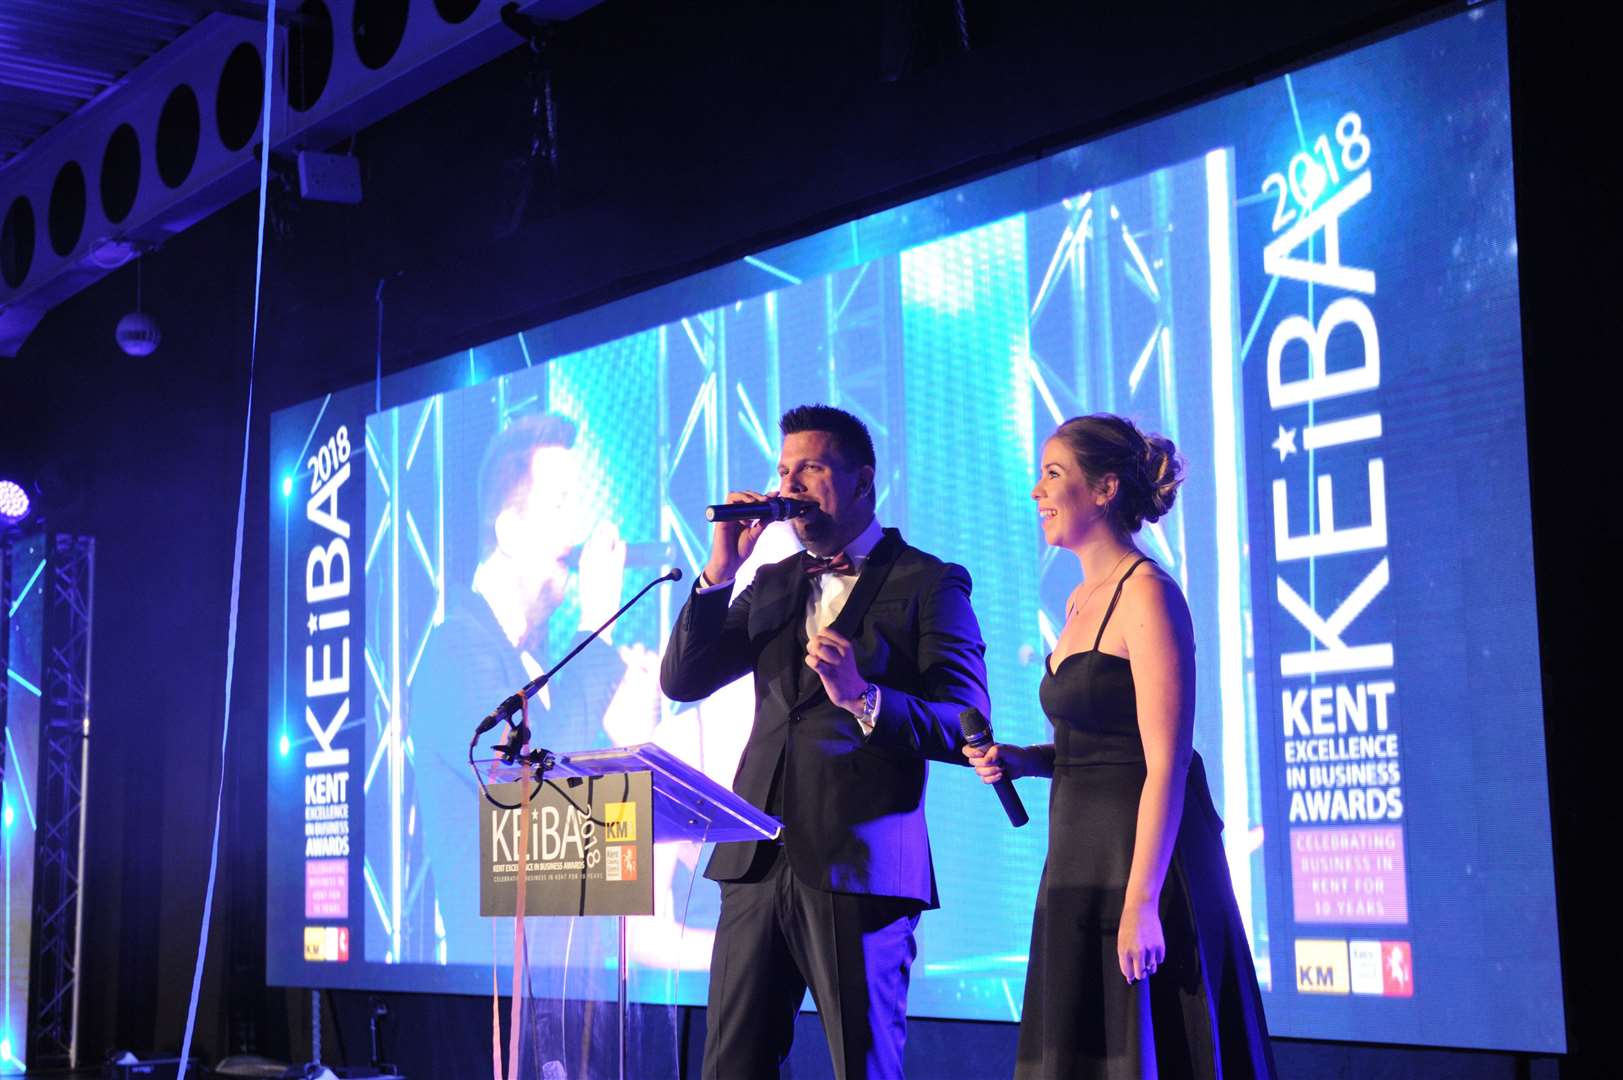 Presenters from kmfm at the KEiBA 2018 gala night